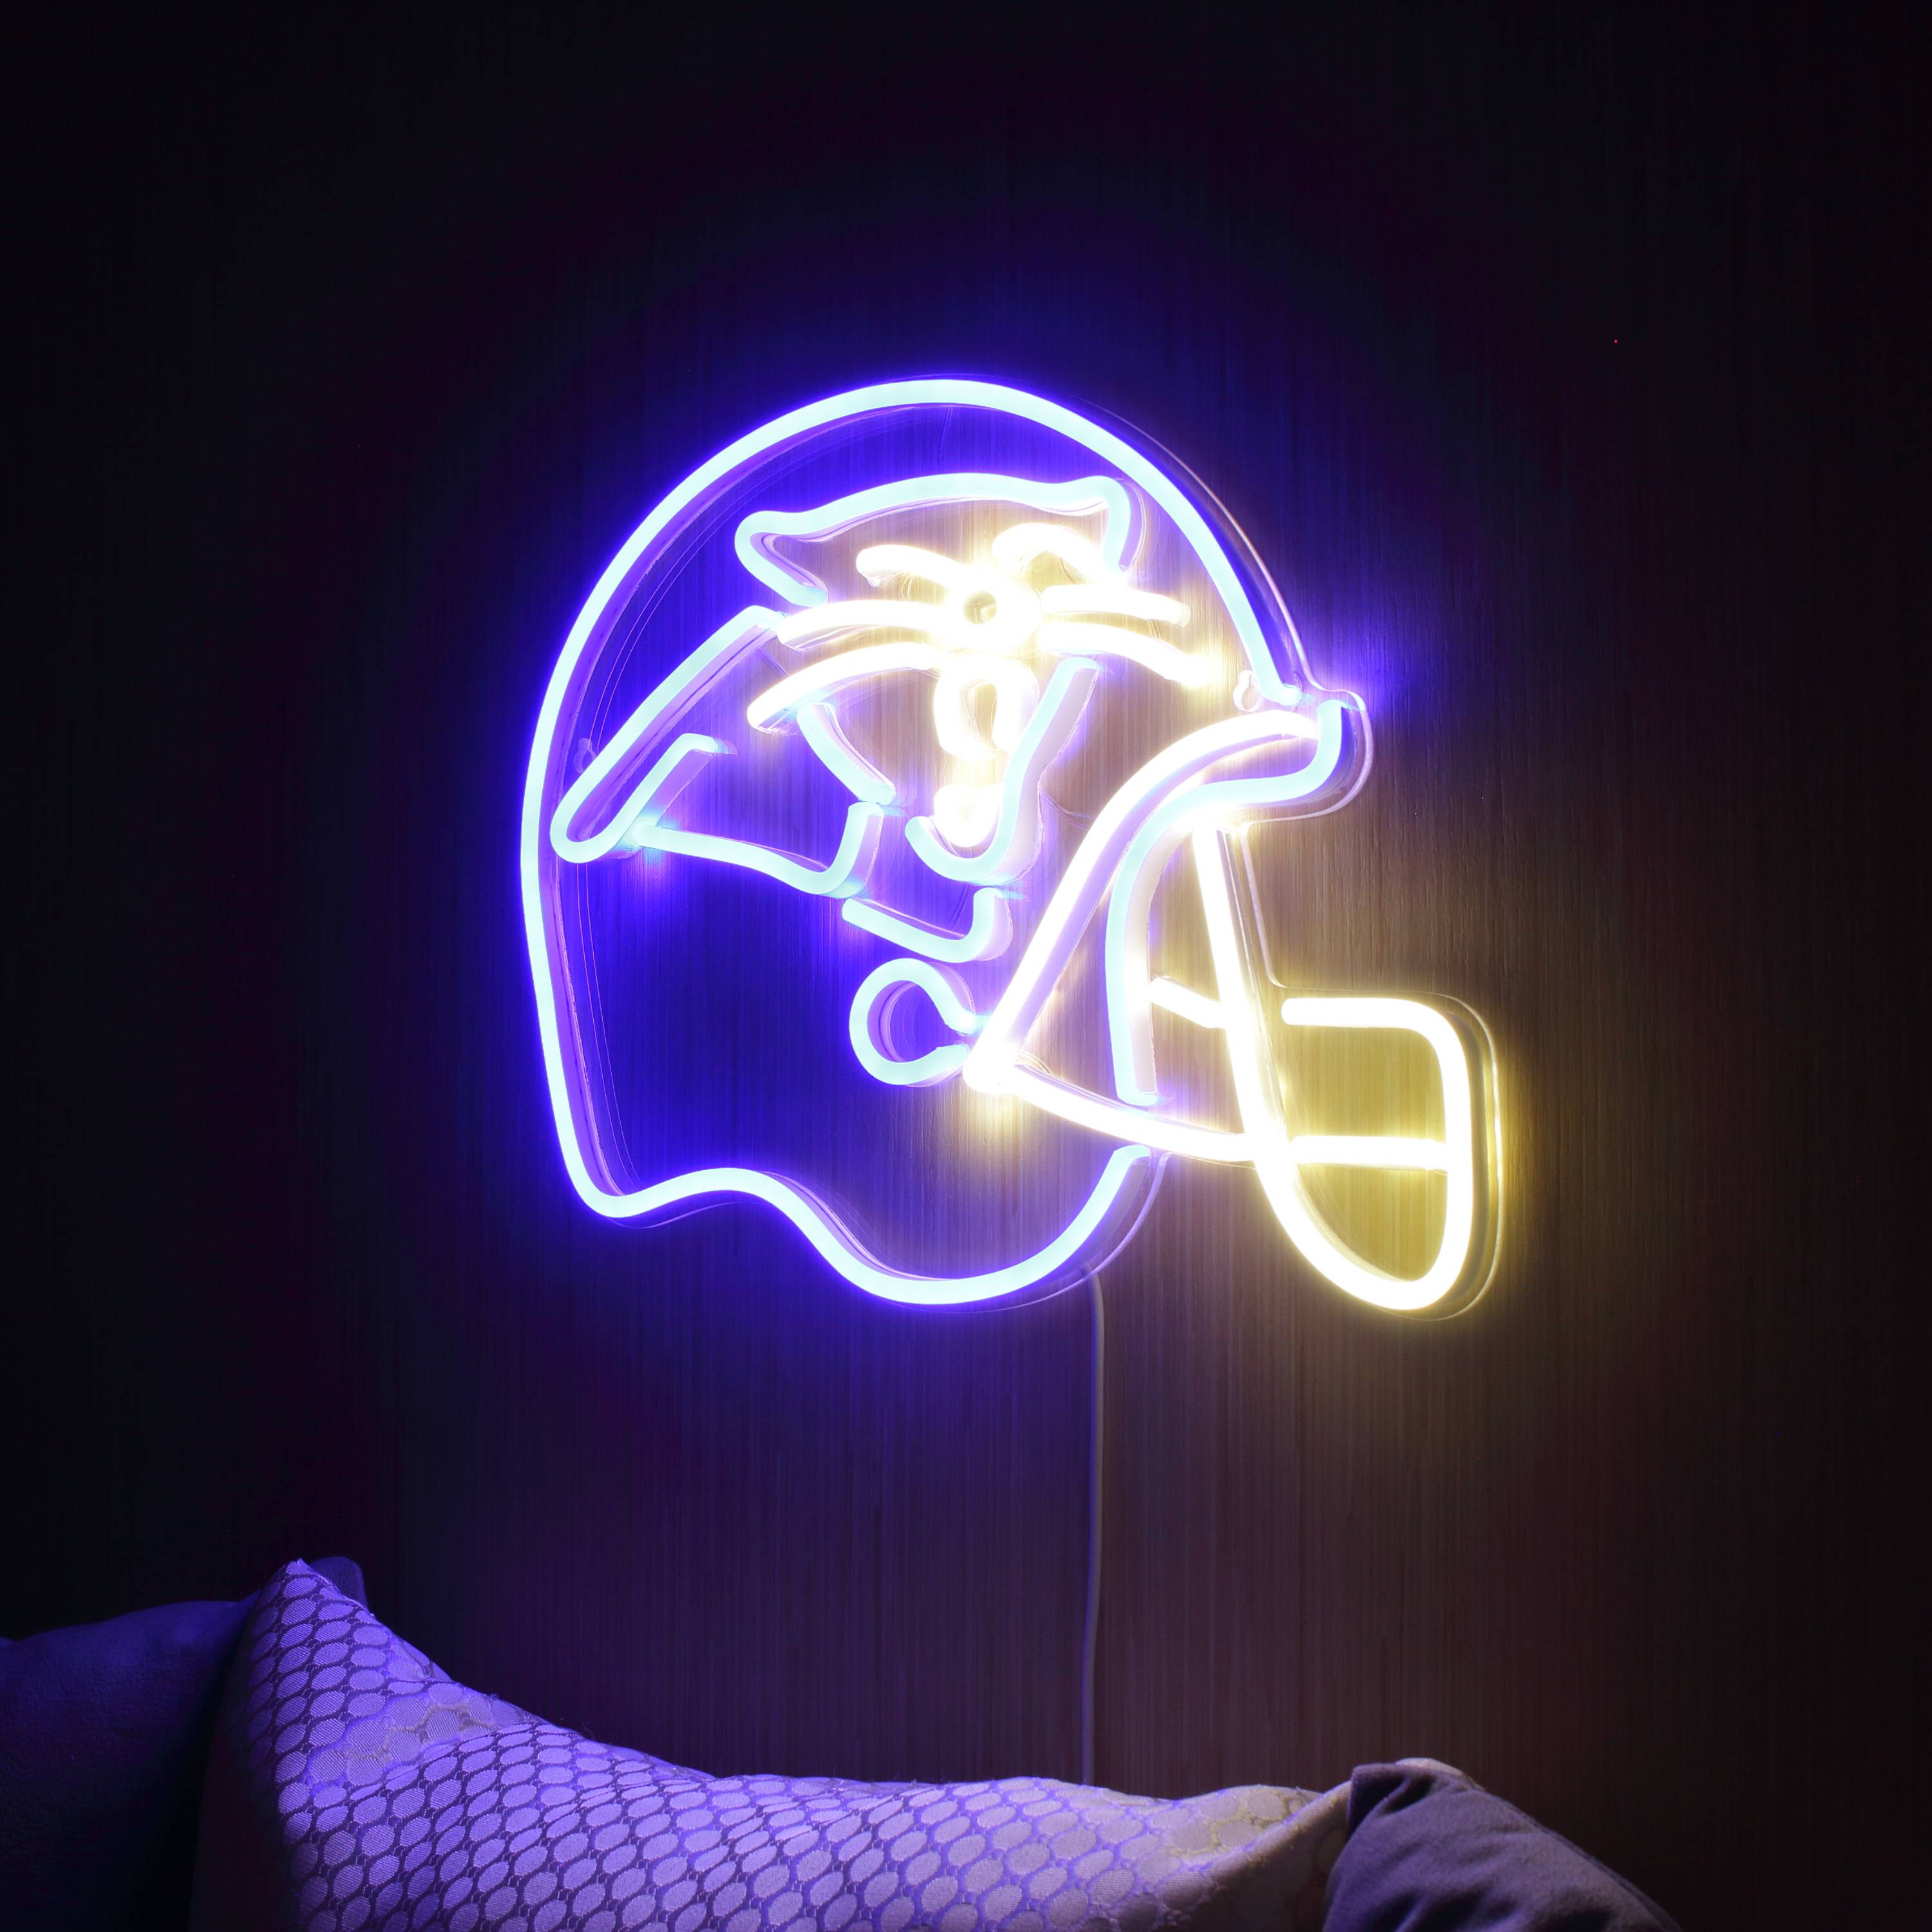 NFL Helmet Carolina Panthers LED Neon Sign